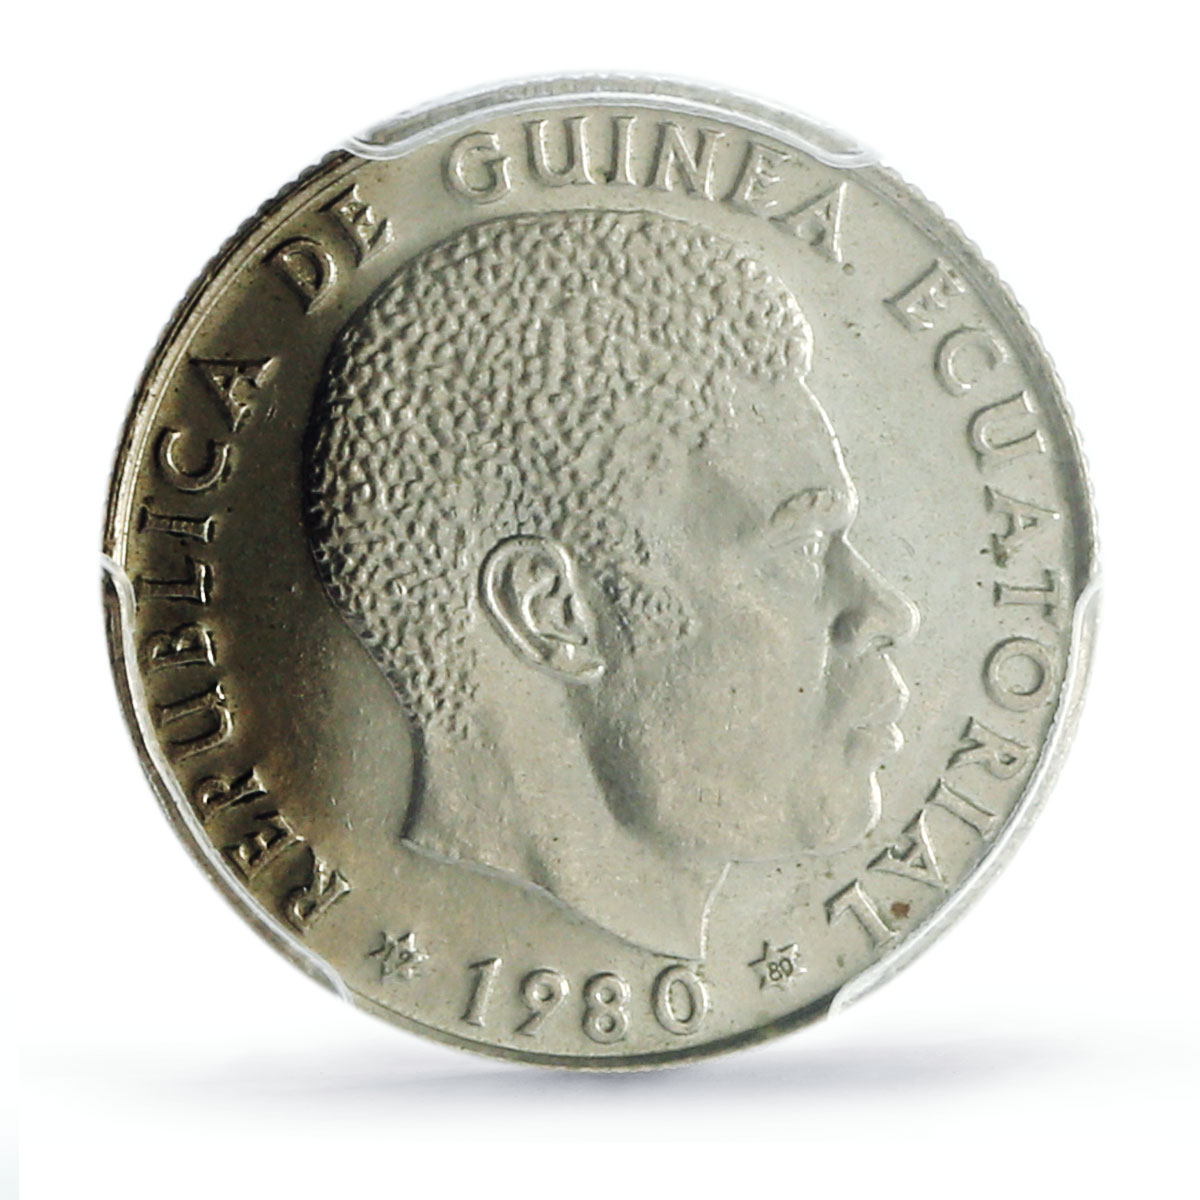 Equatorial Guinea 5 bipkwele President Nguema Politics UNC PCGS CuNi coin 1980